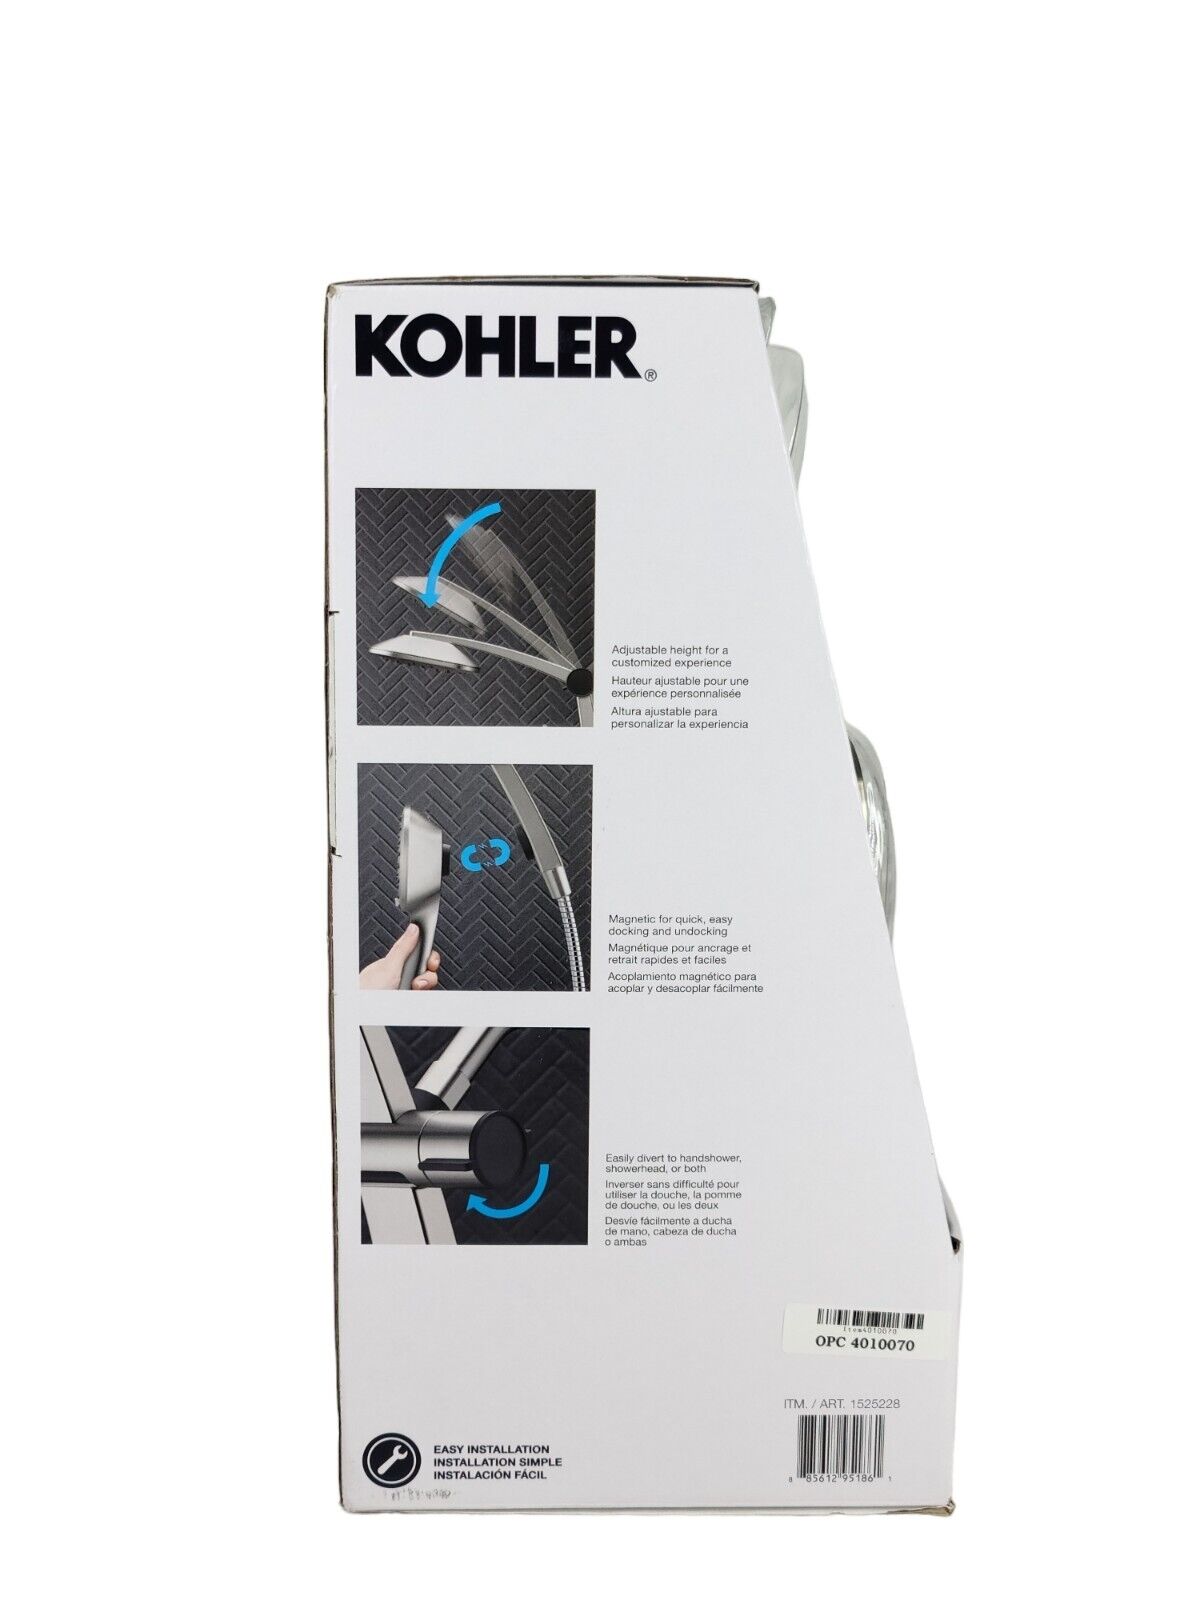 Kohler Adjuste 3-in-1 Multifunction Shower Head Brushed Nickel Silver